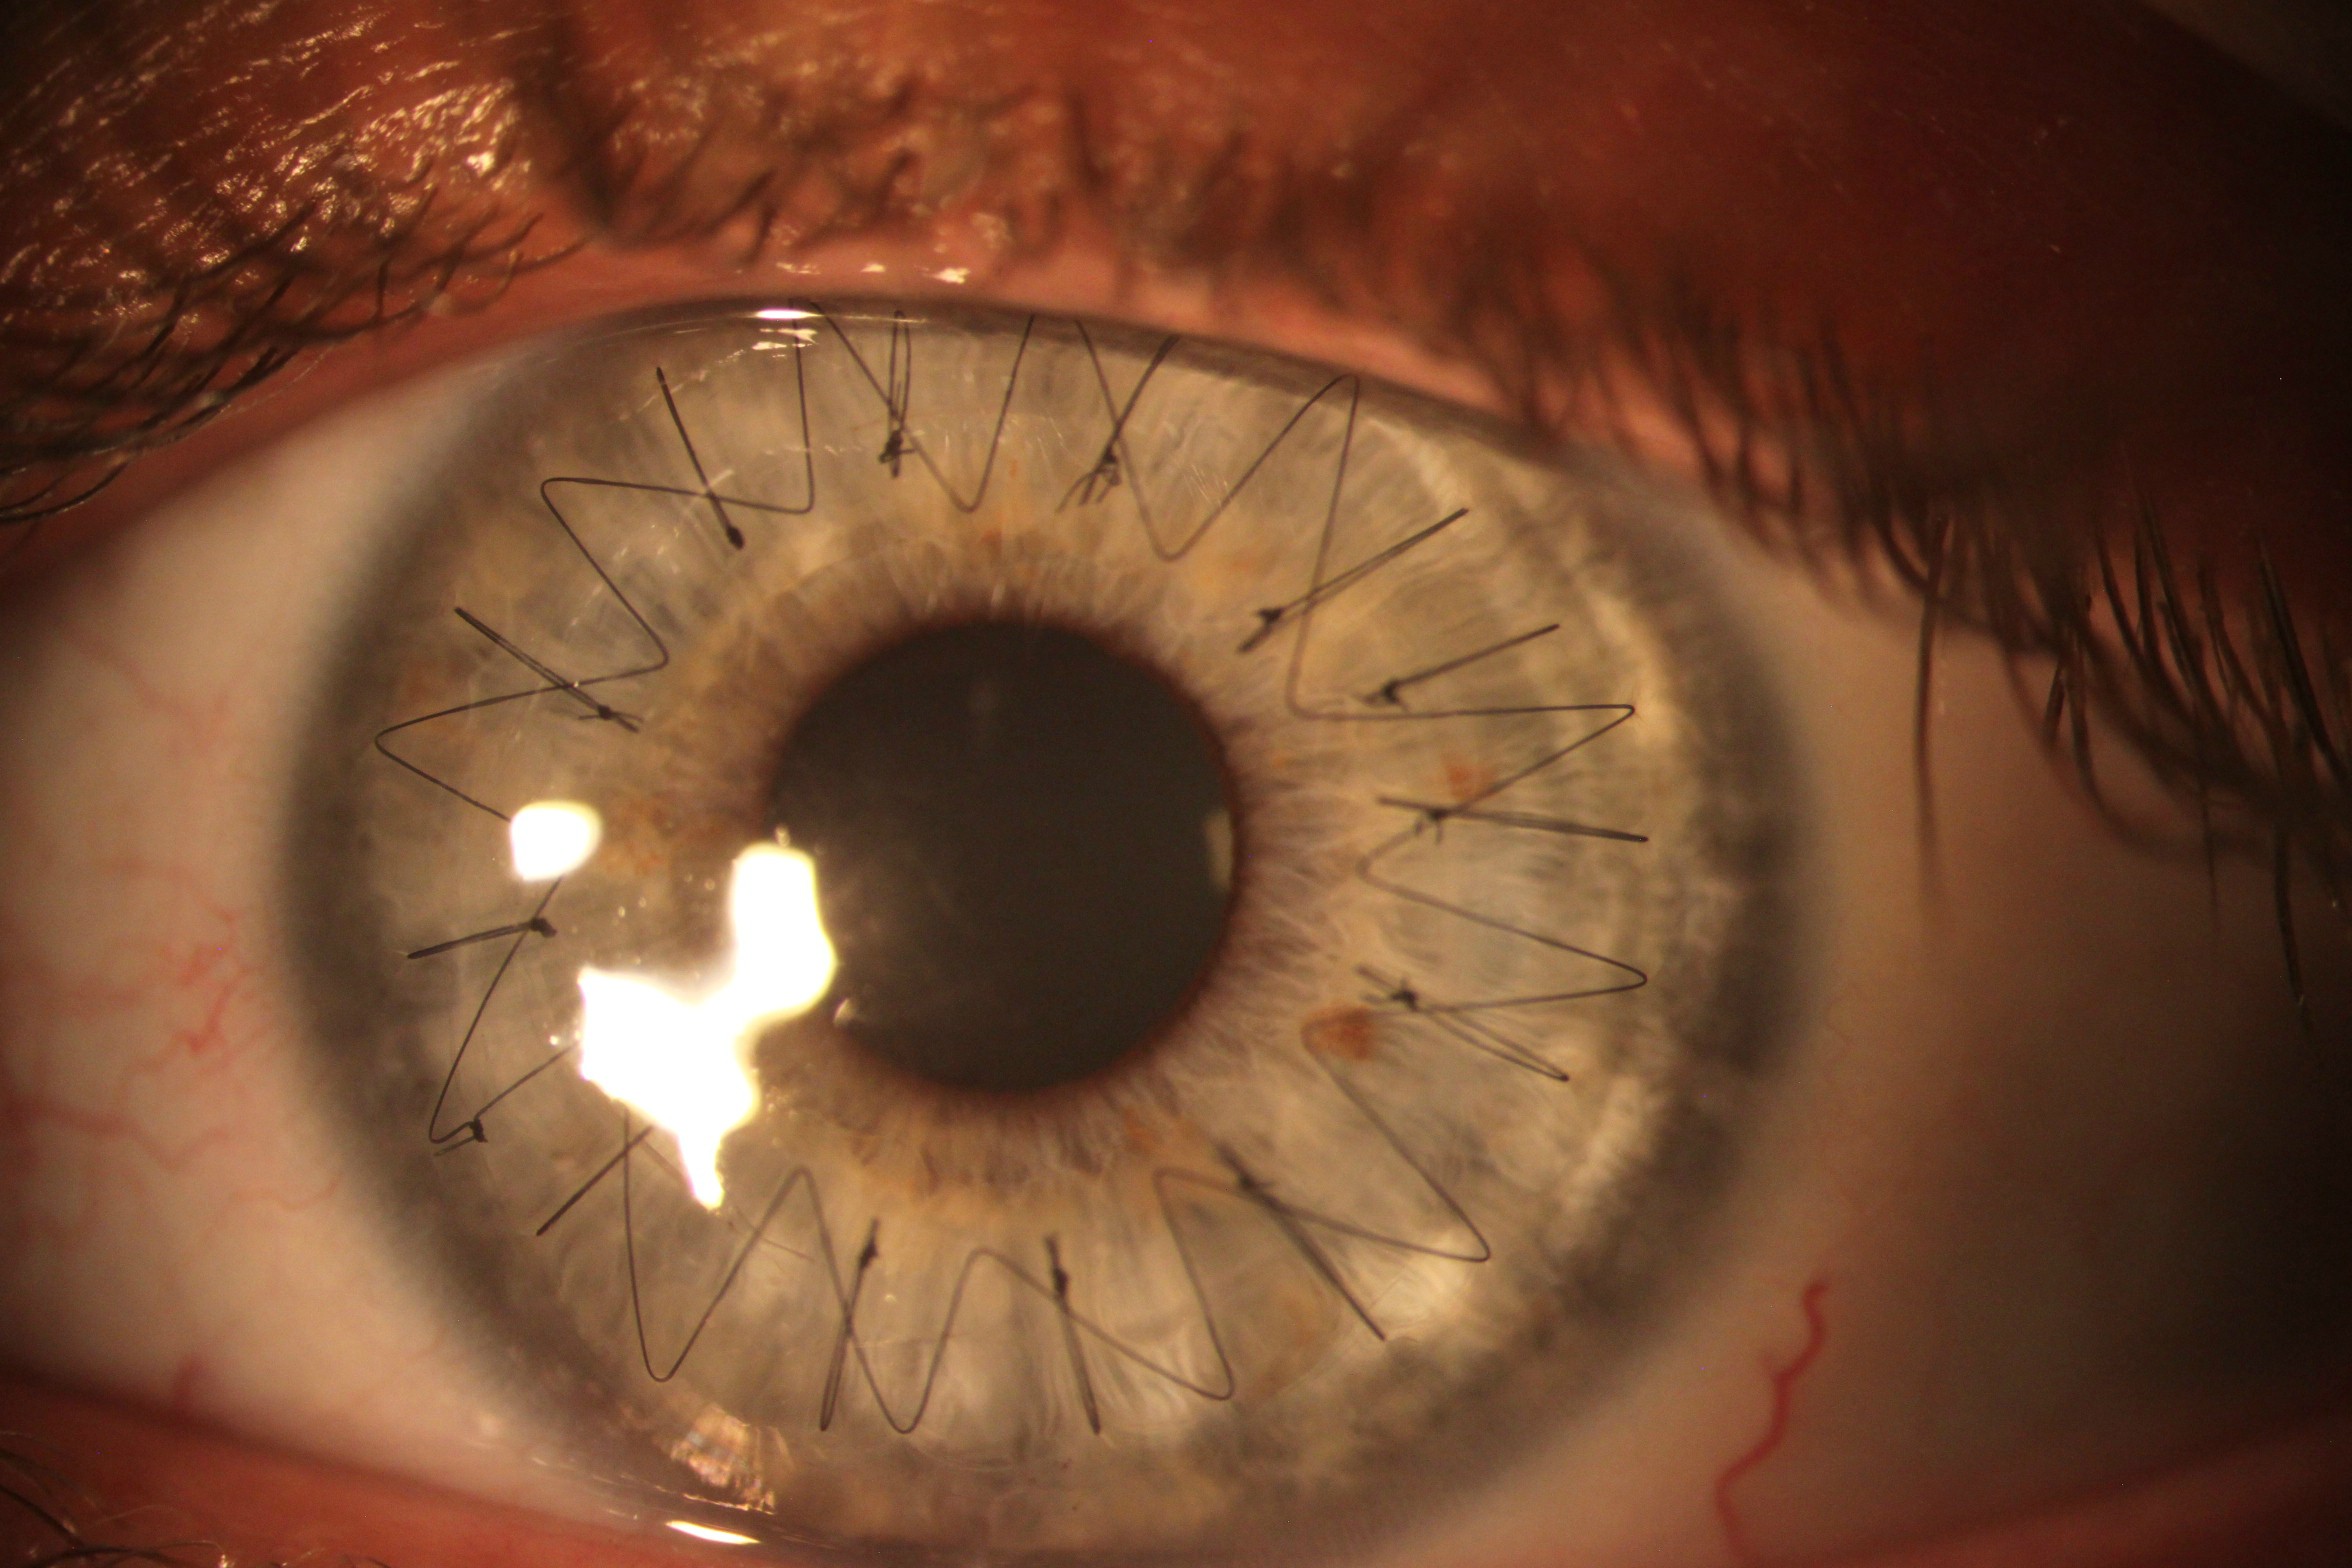 Stitches in an eye